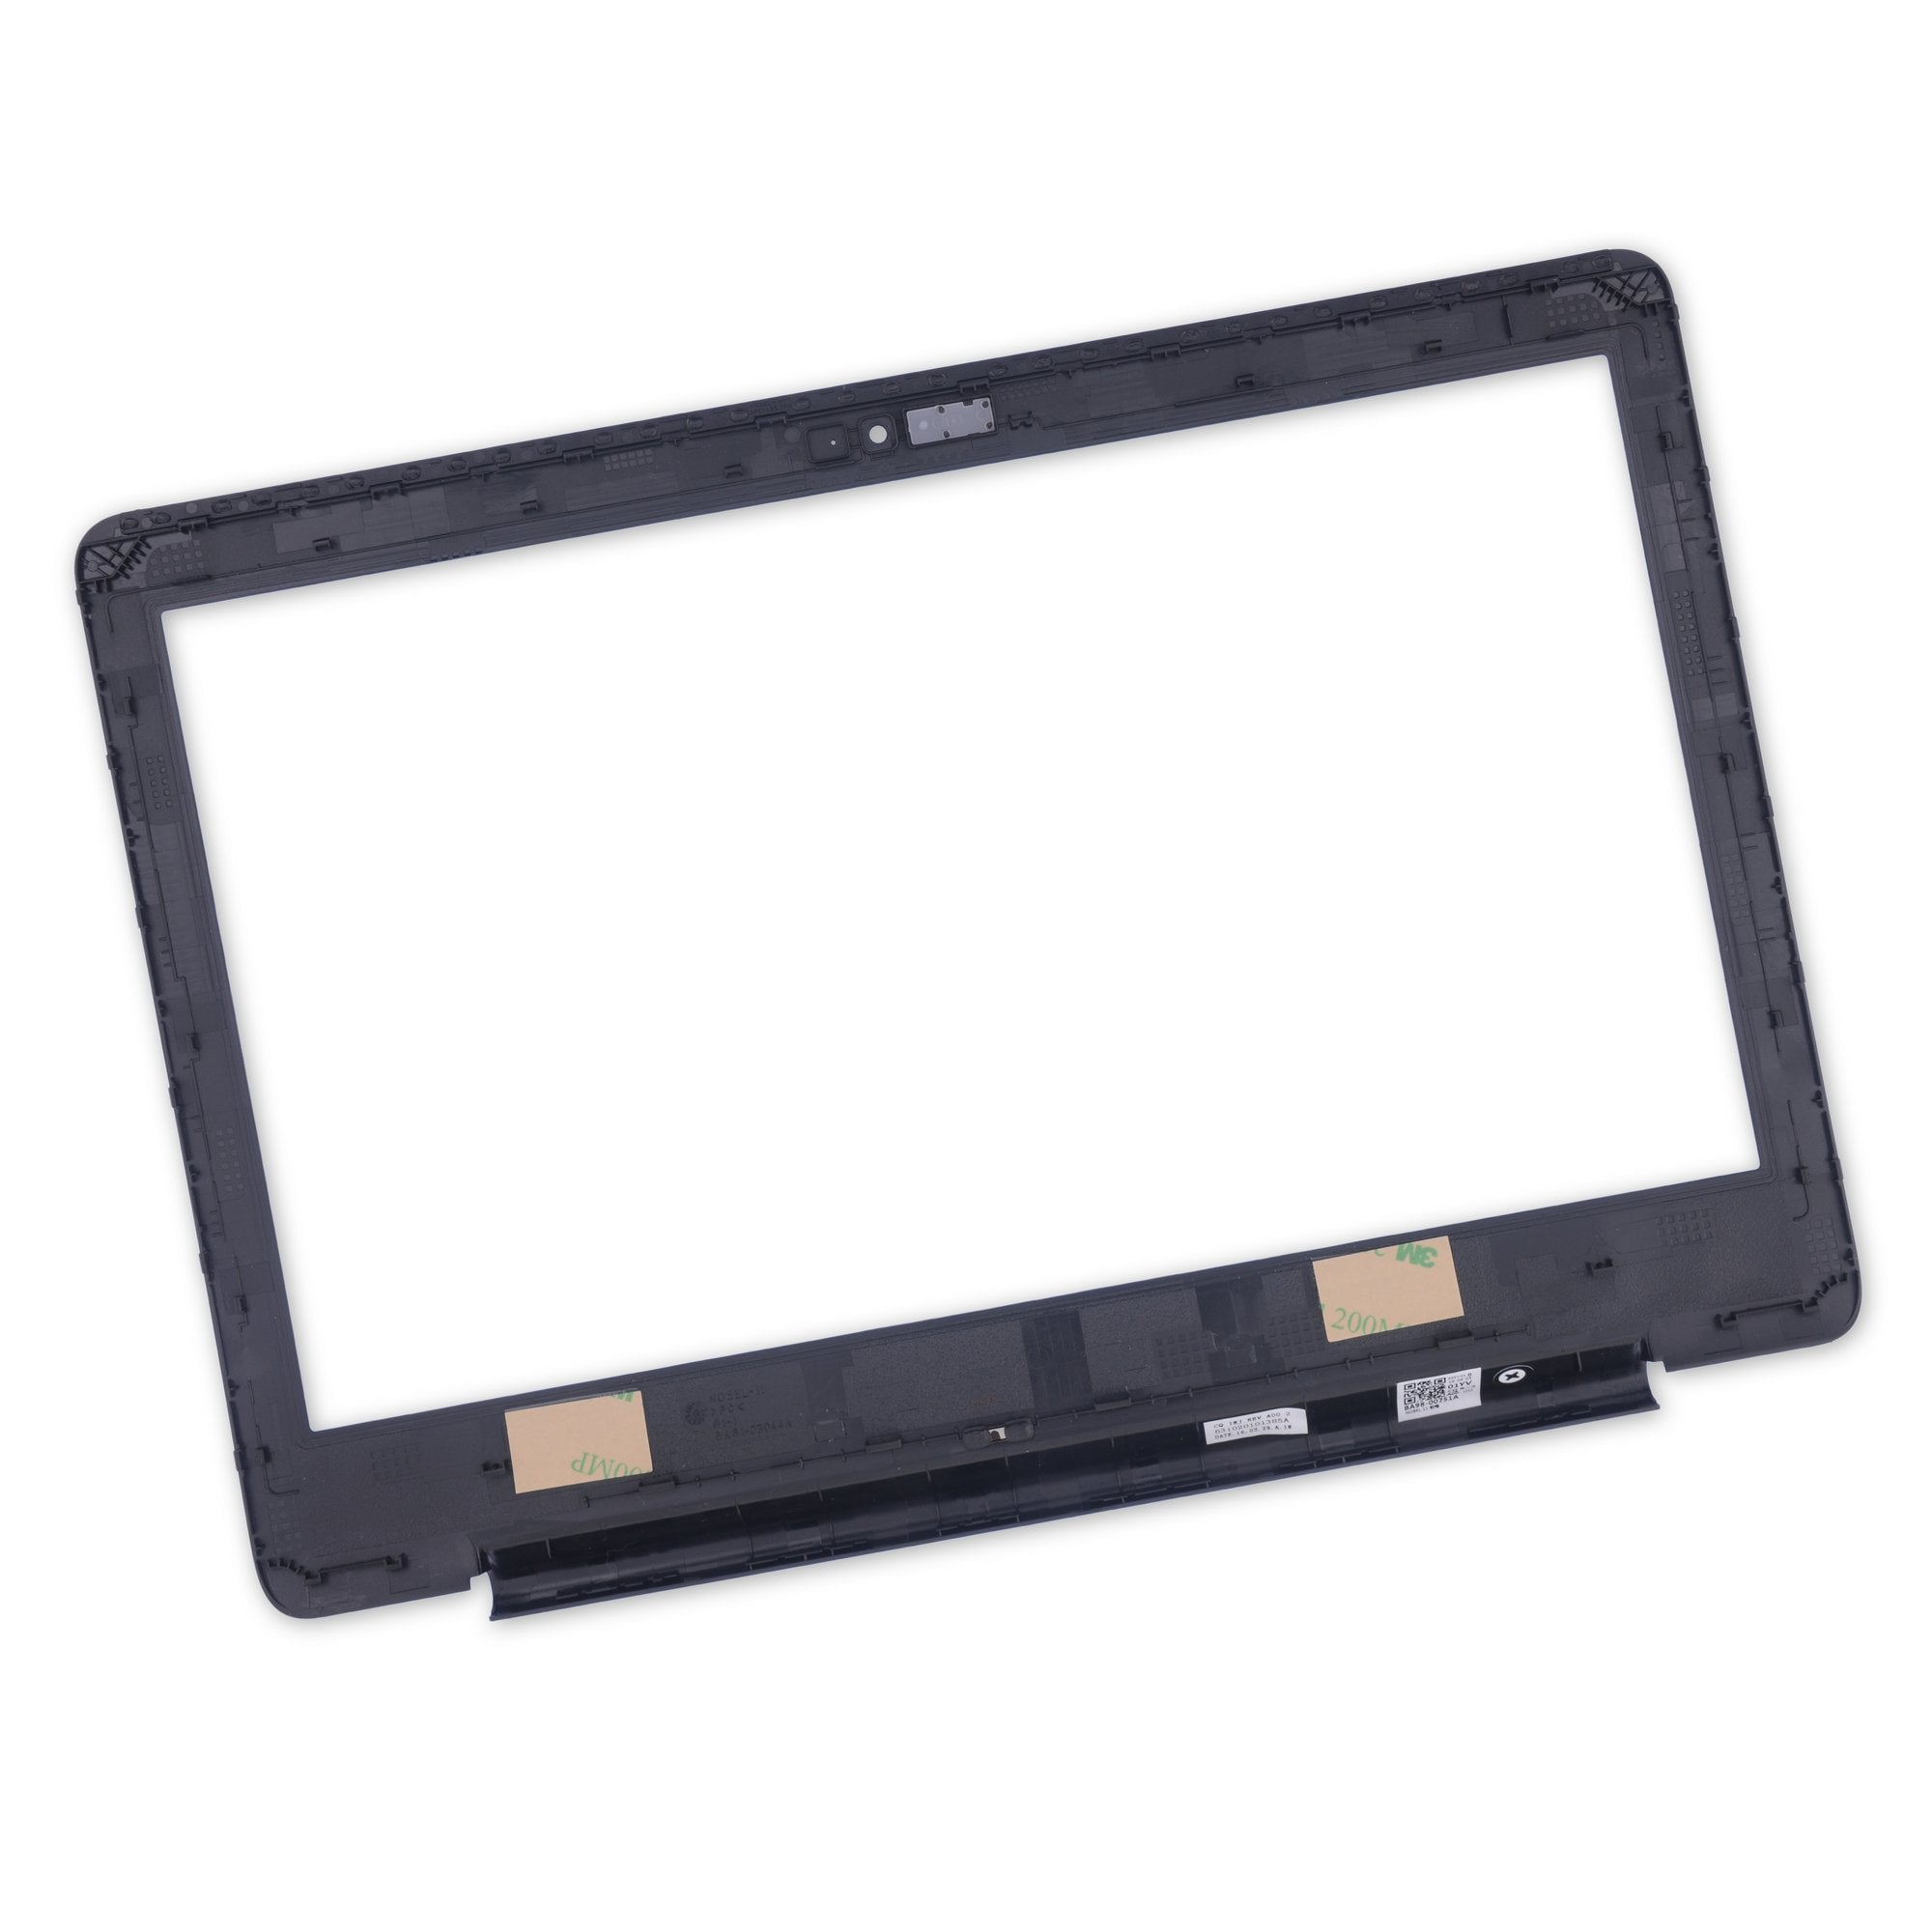 Samsung Chromebook XE500C13 LCD Bezel